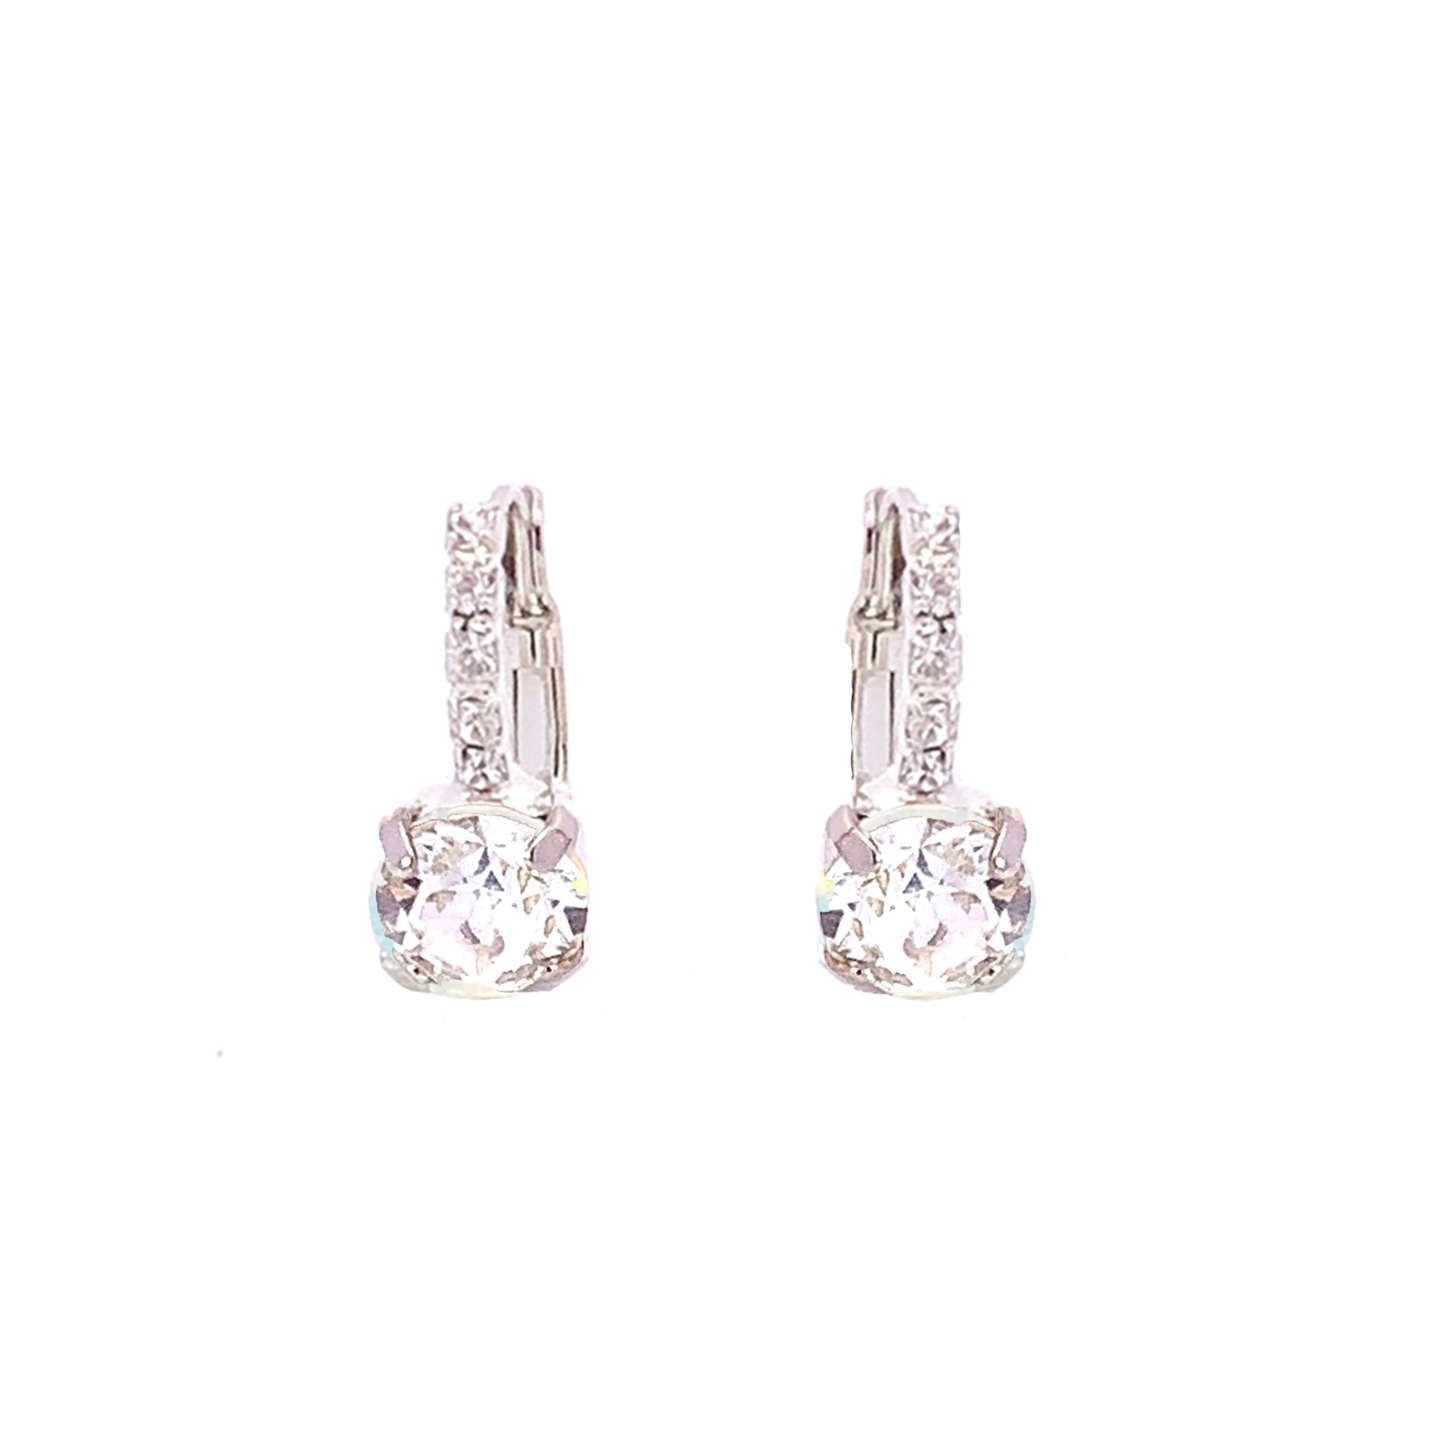 Simulated diamond pave bridesmaid earrings silver